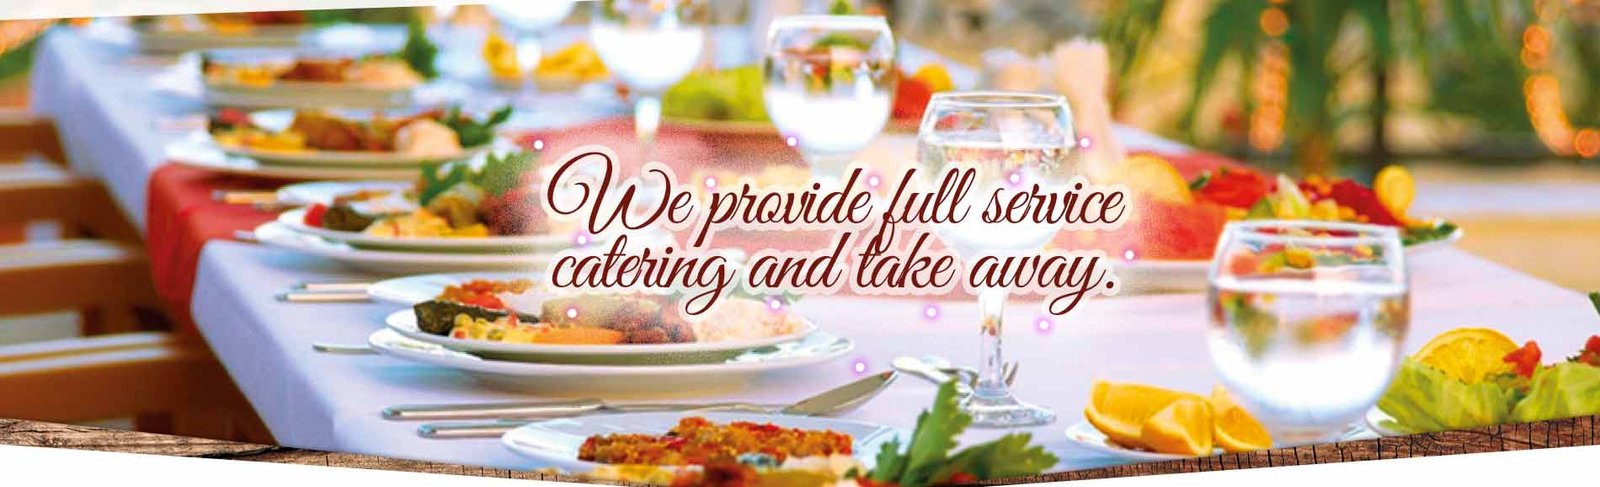 Catering menus for weddings in Jefferson County - Fairbury NE